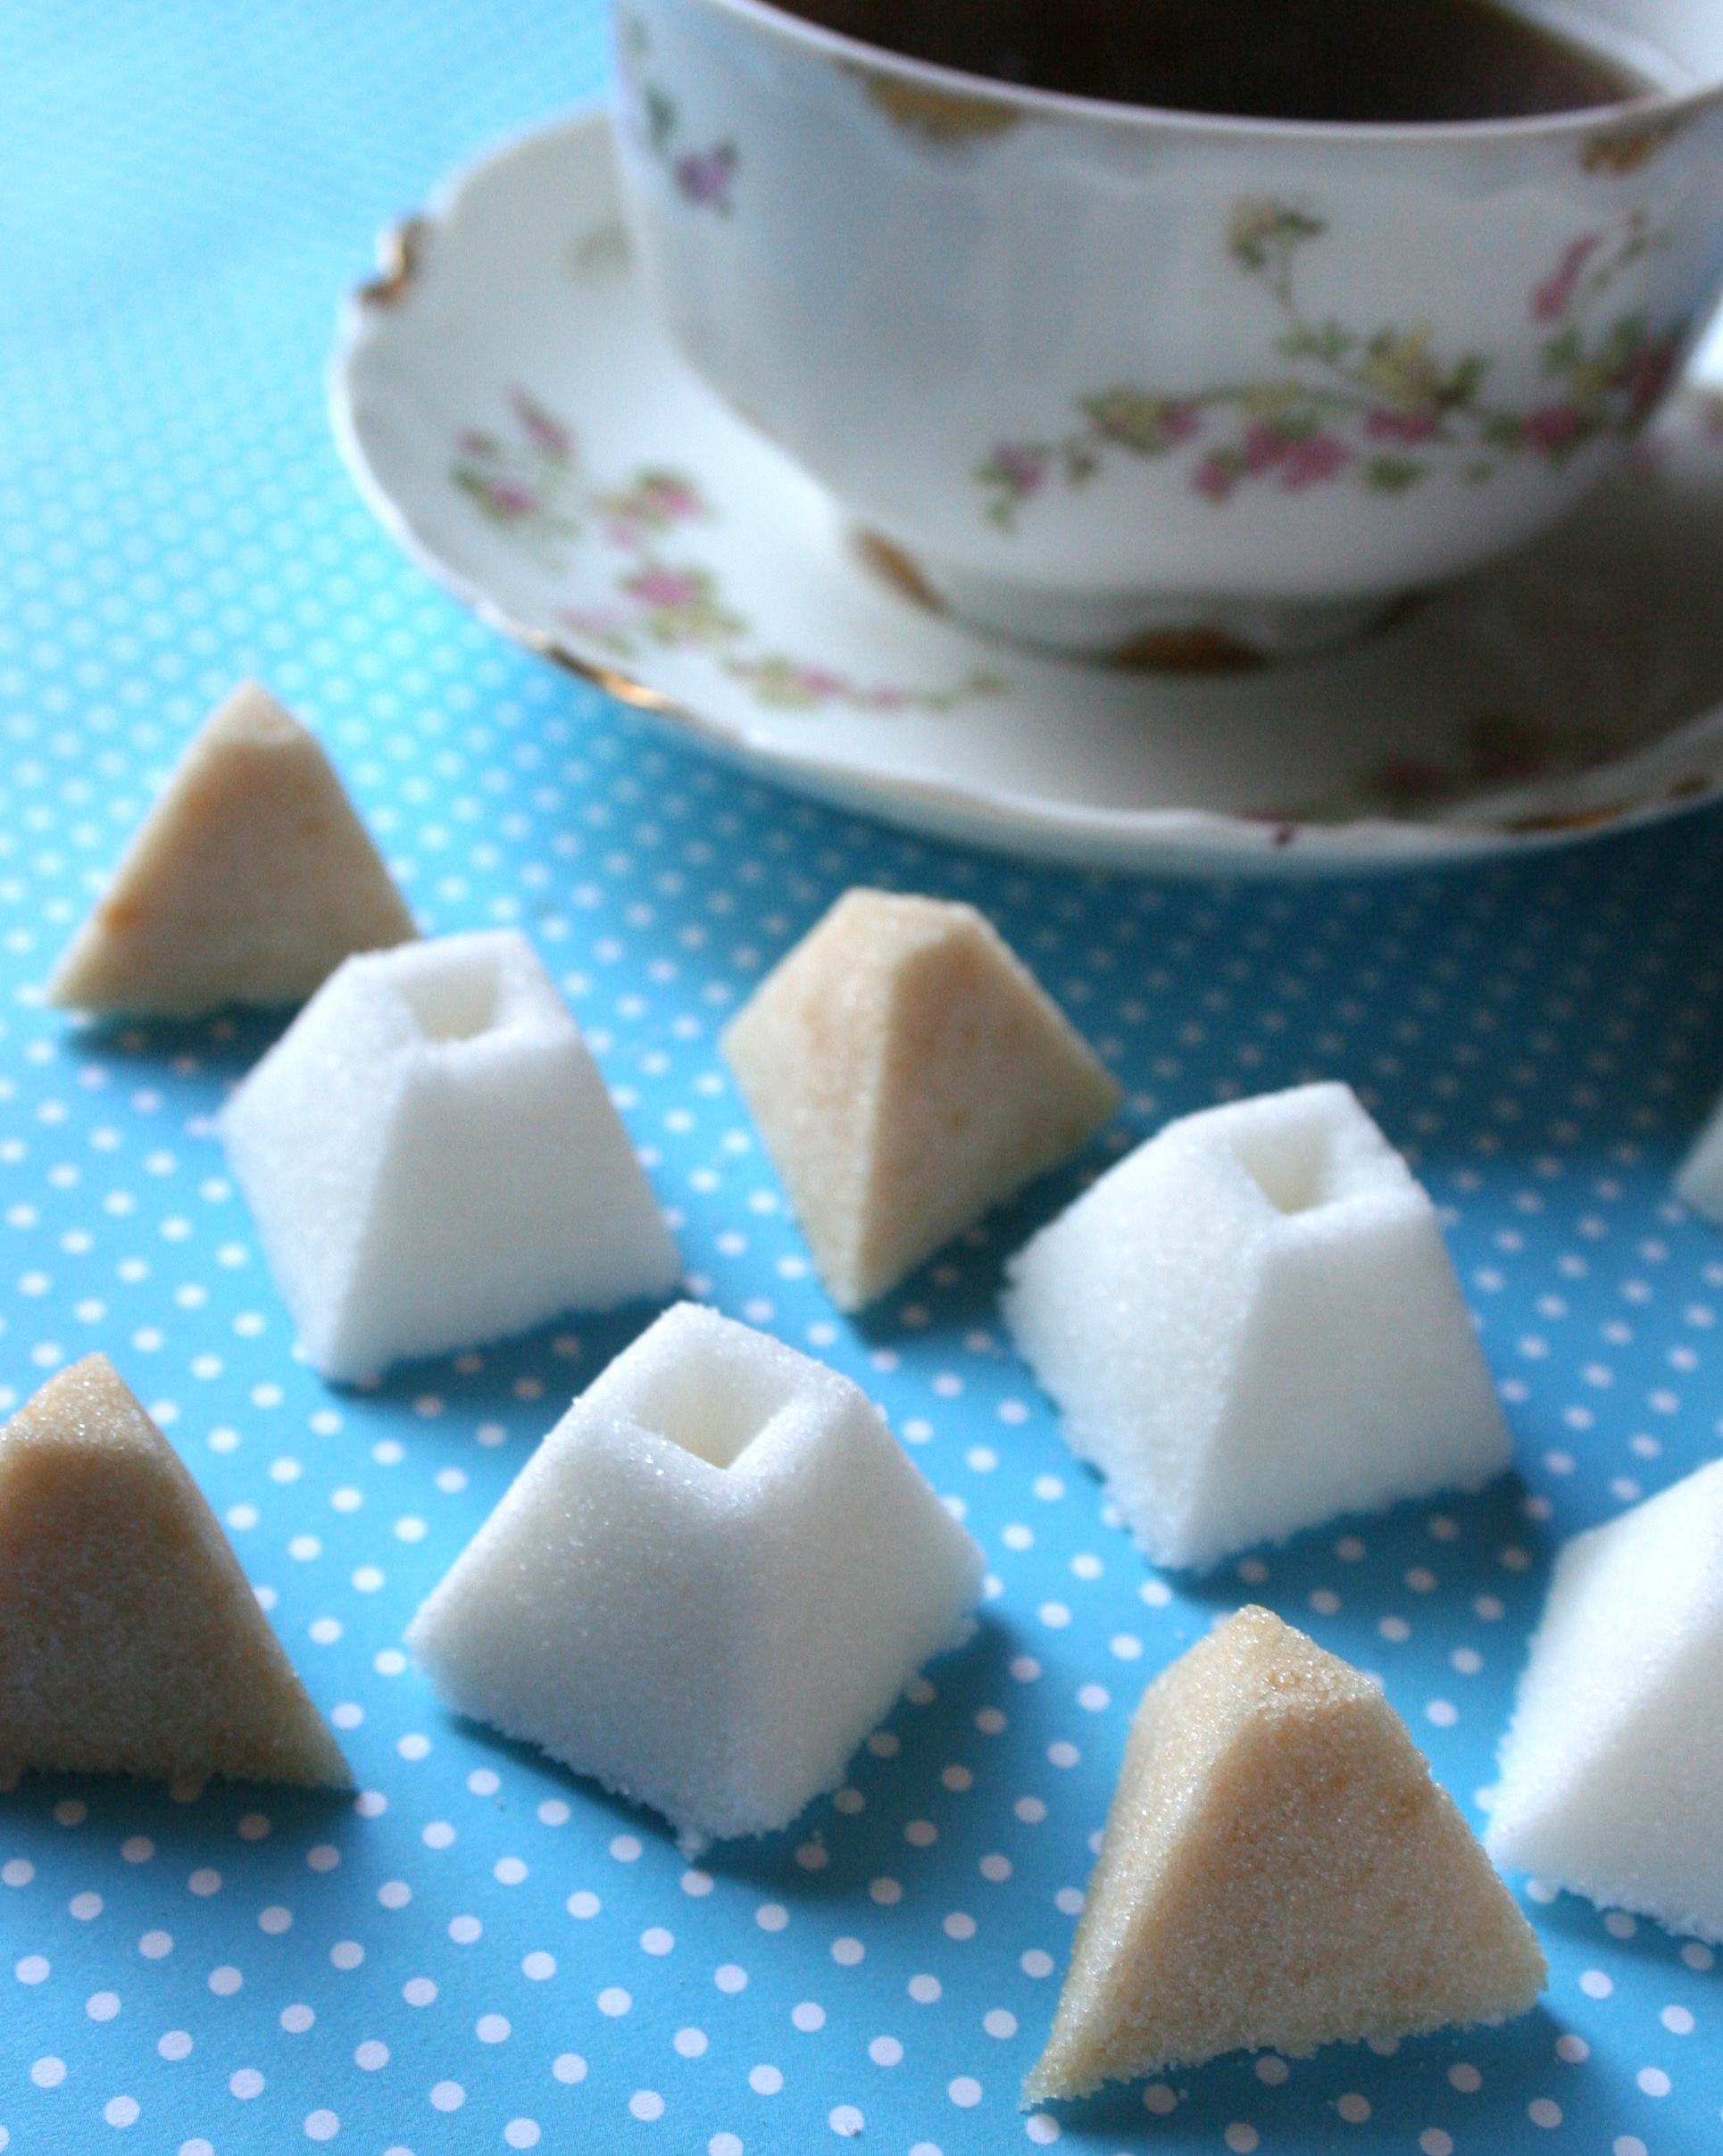 Homemade sugar cubes